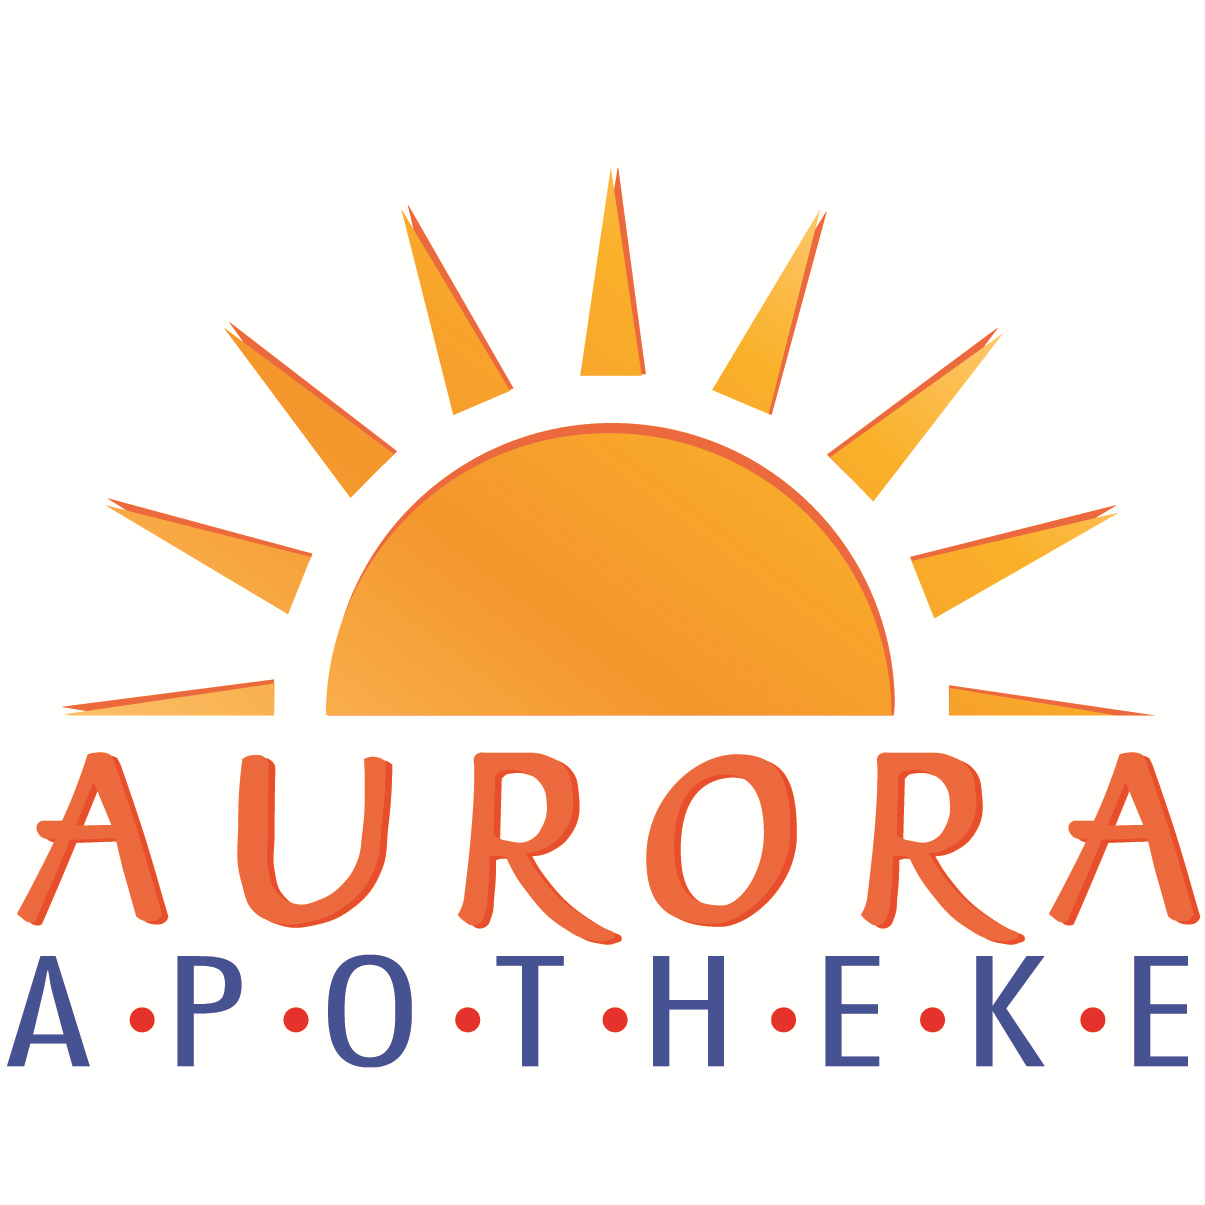 Aurora-Apotheke Logo